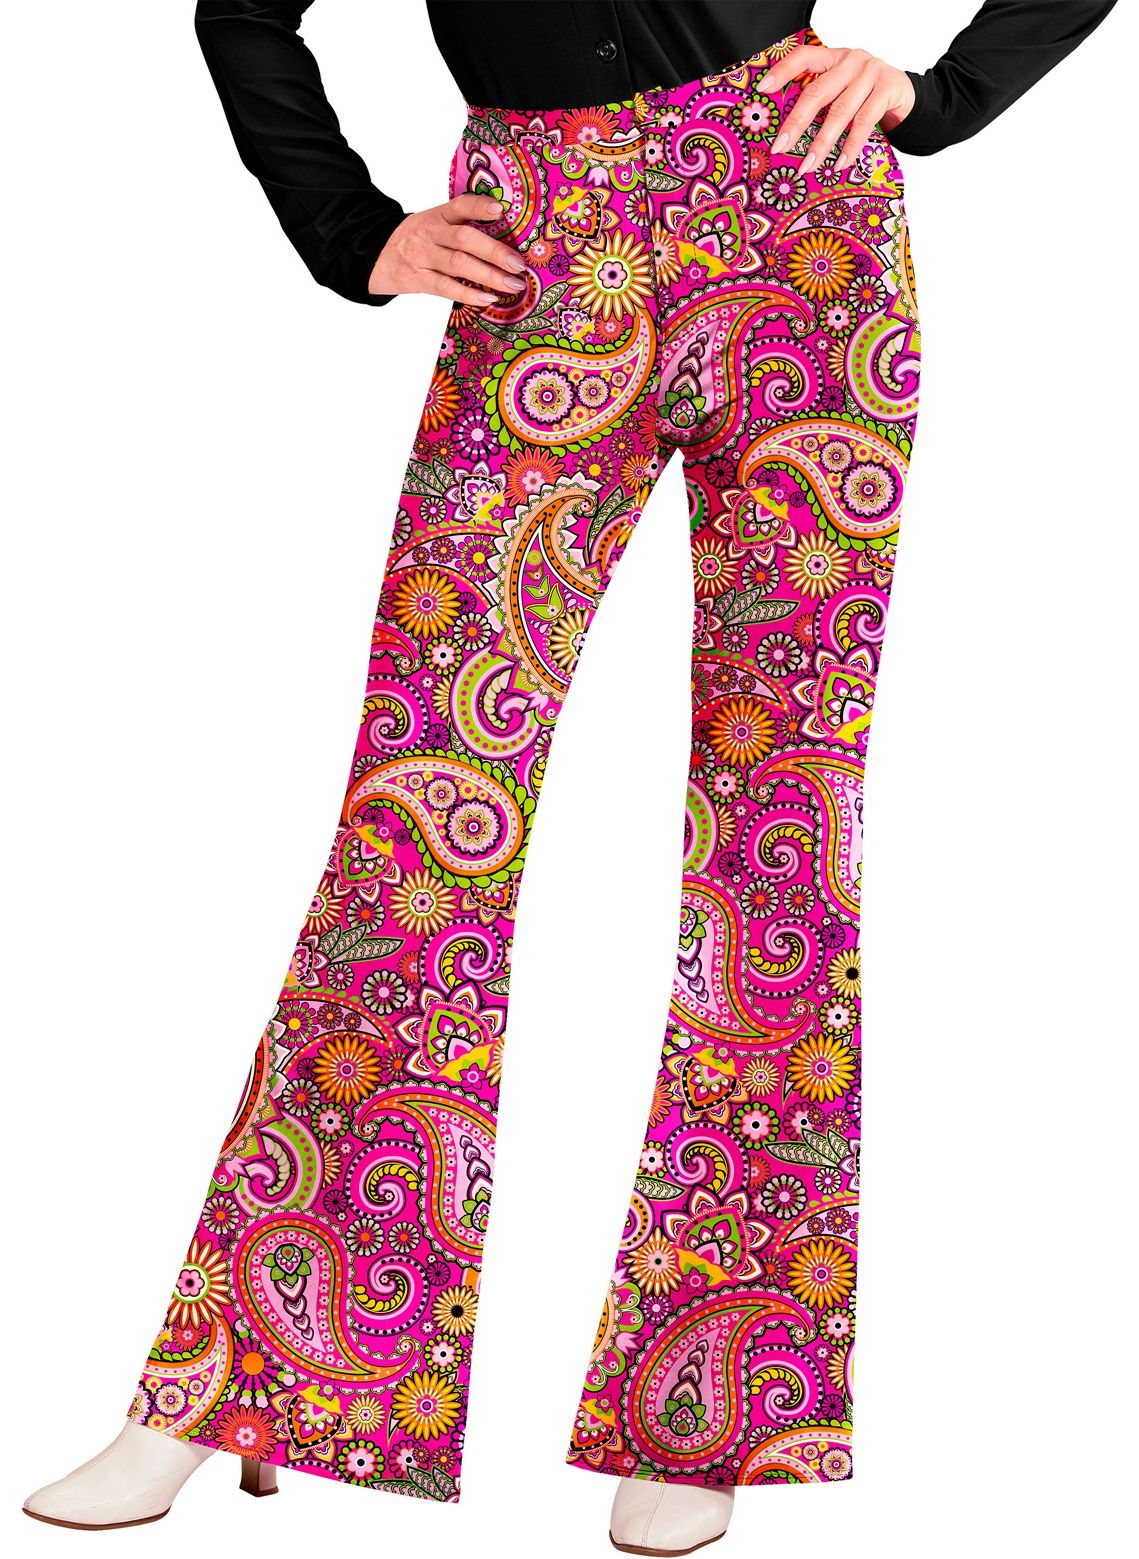 Hippie style pantalon vrouwen